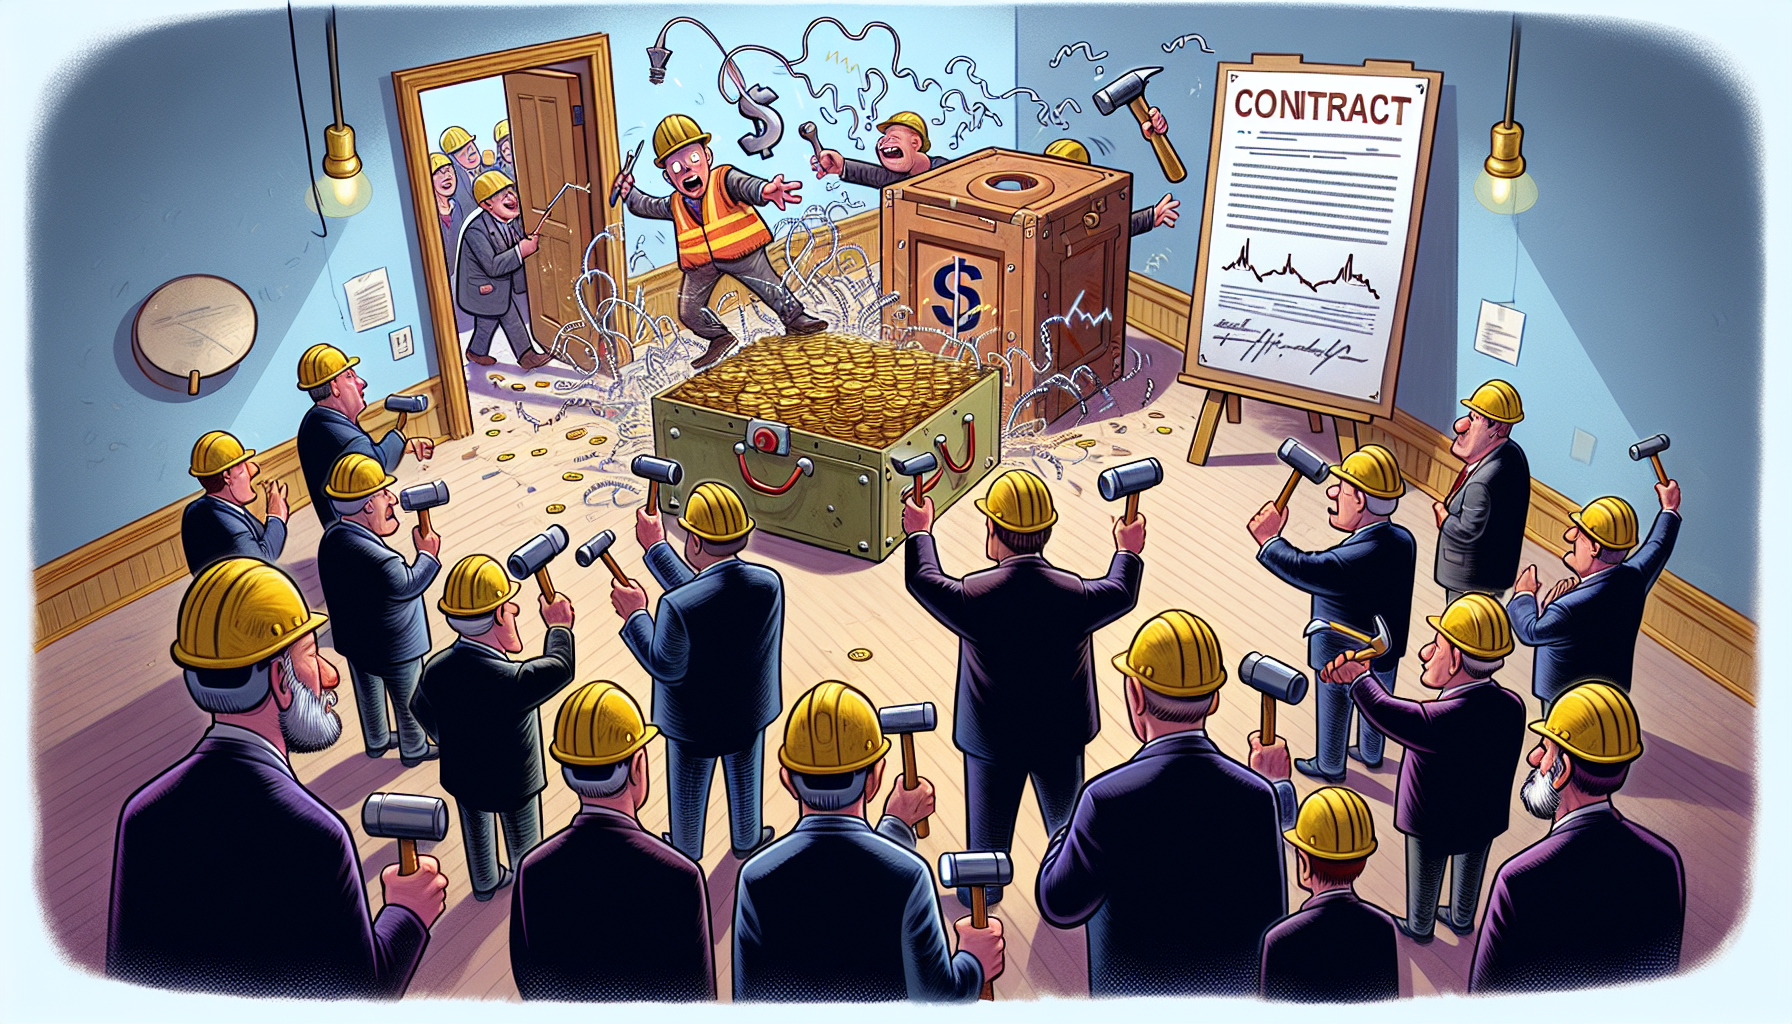 Cartoon of a construction bid process